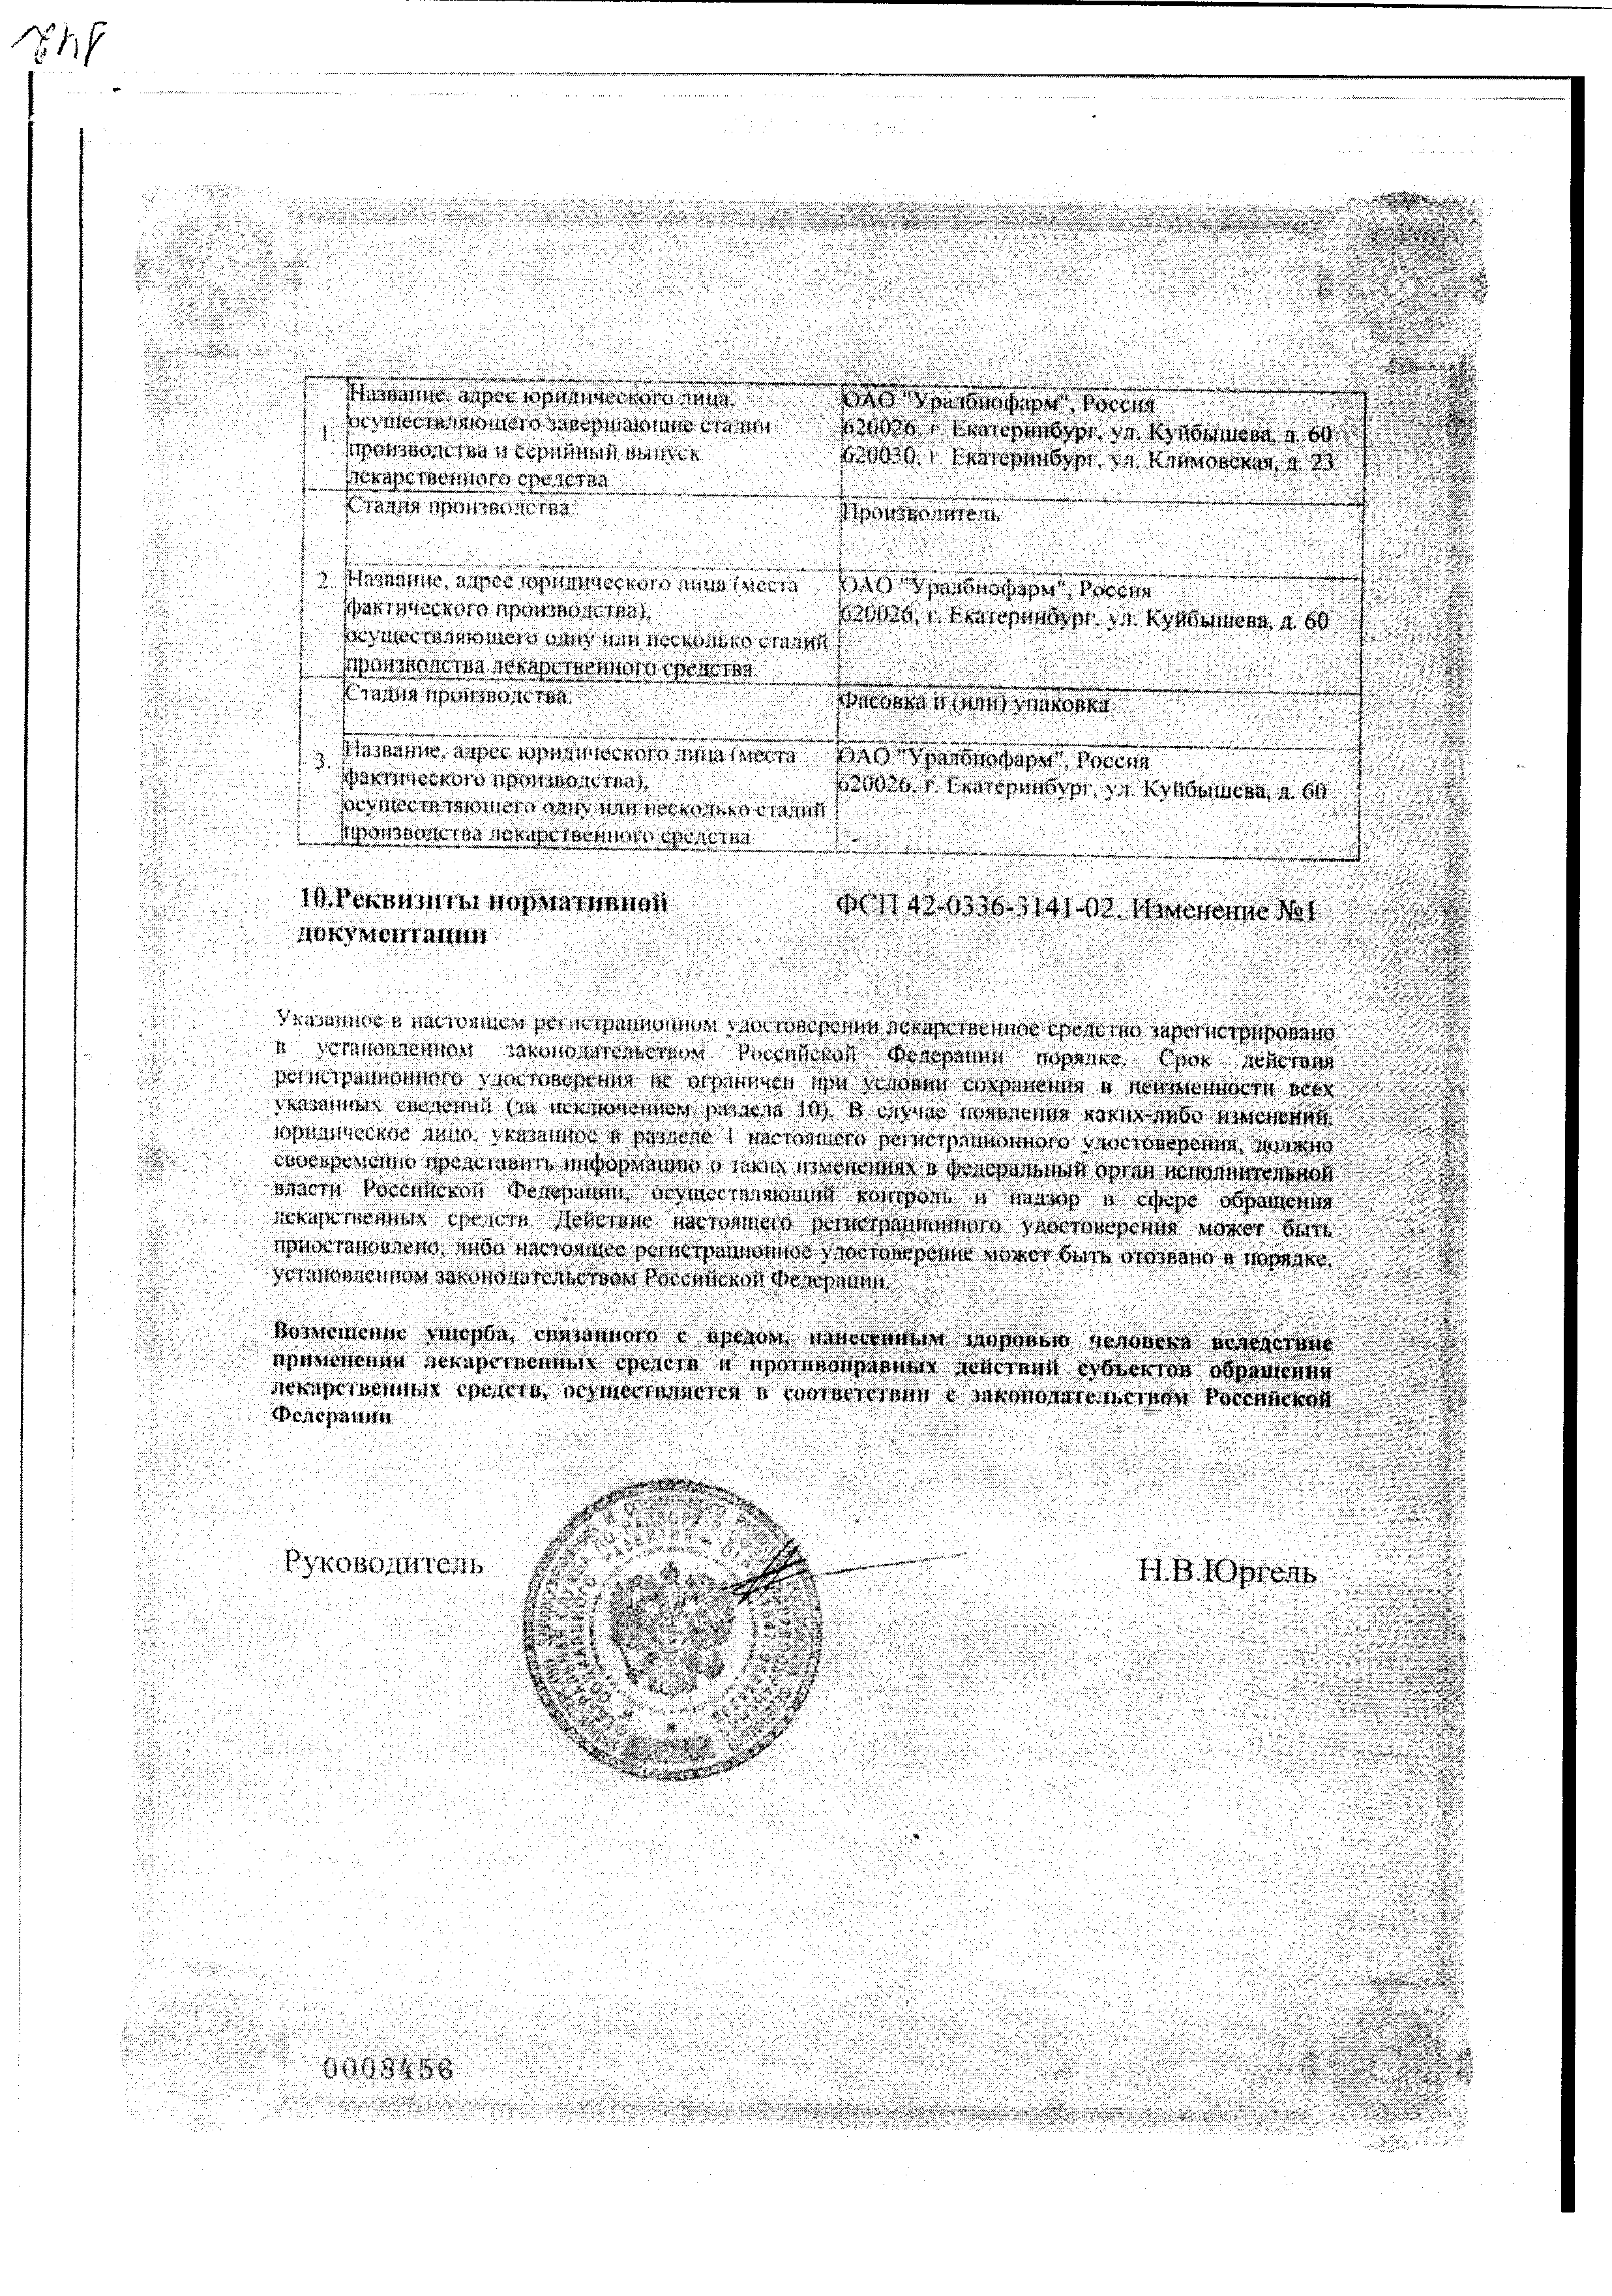 Дибазол-УБФ сертификат